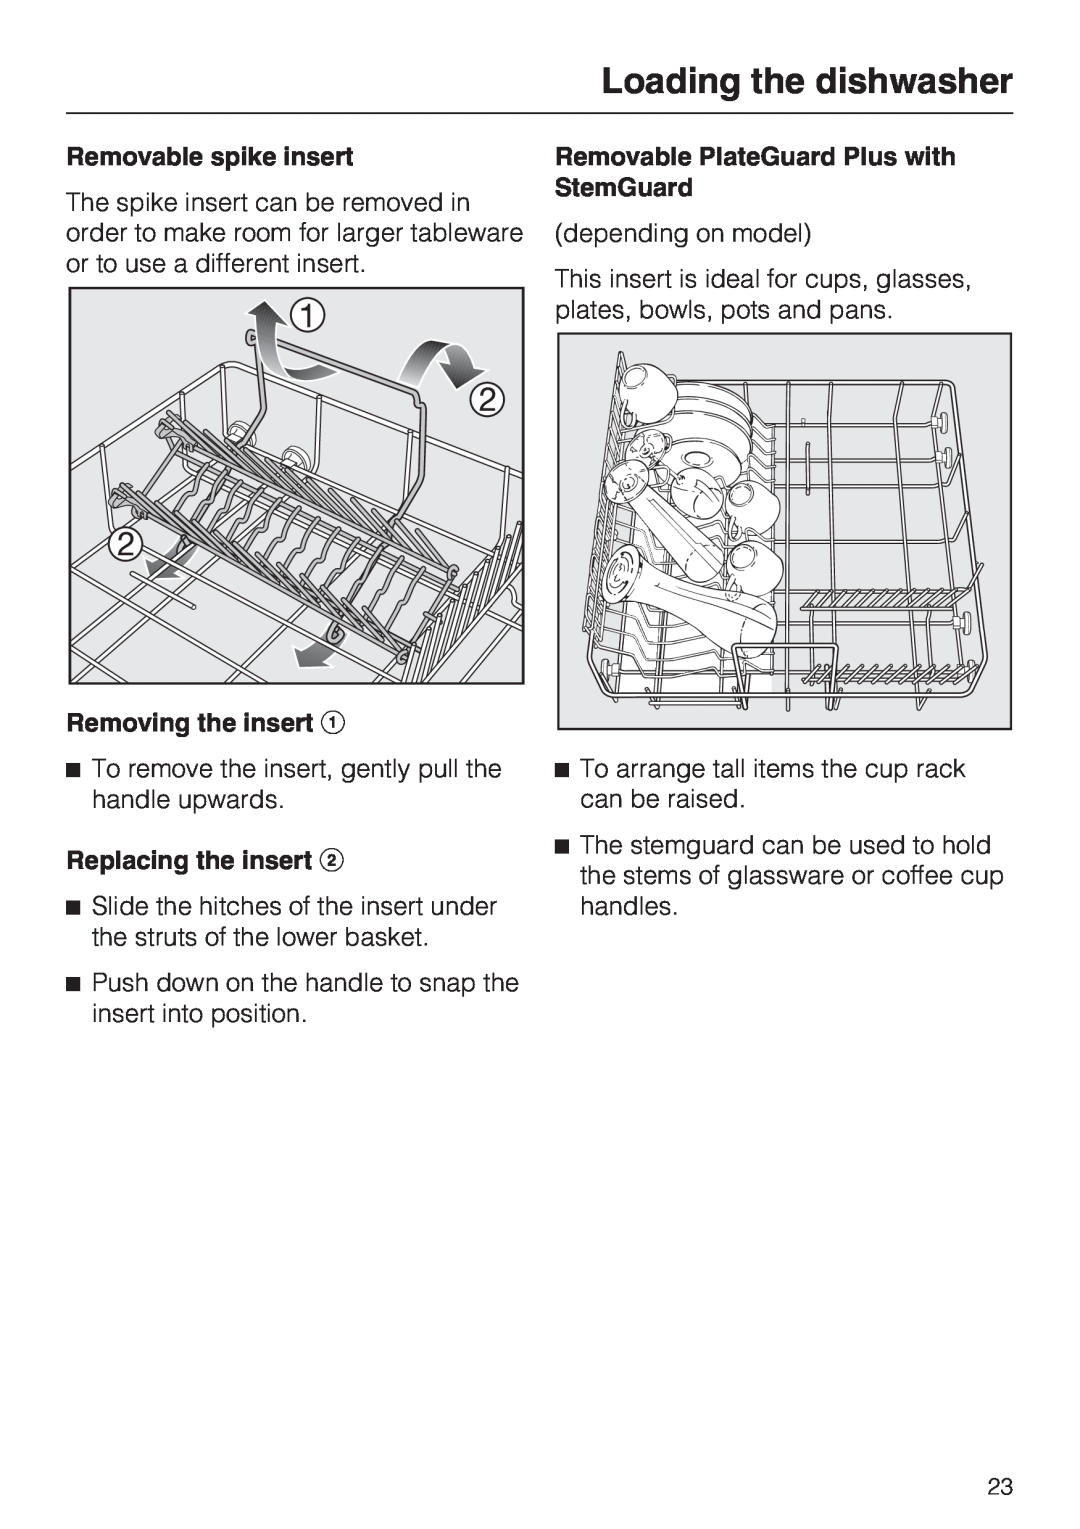 Miele G 2432 manual Loading the dishwasher, Removable spike insert, Removing the insert, Replacing the insert 